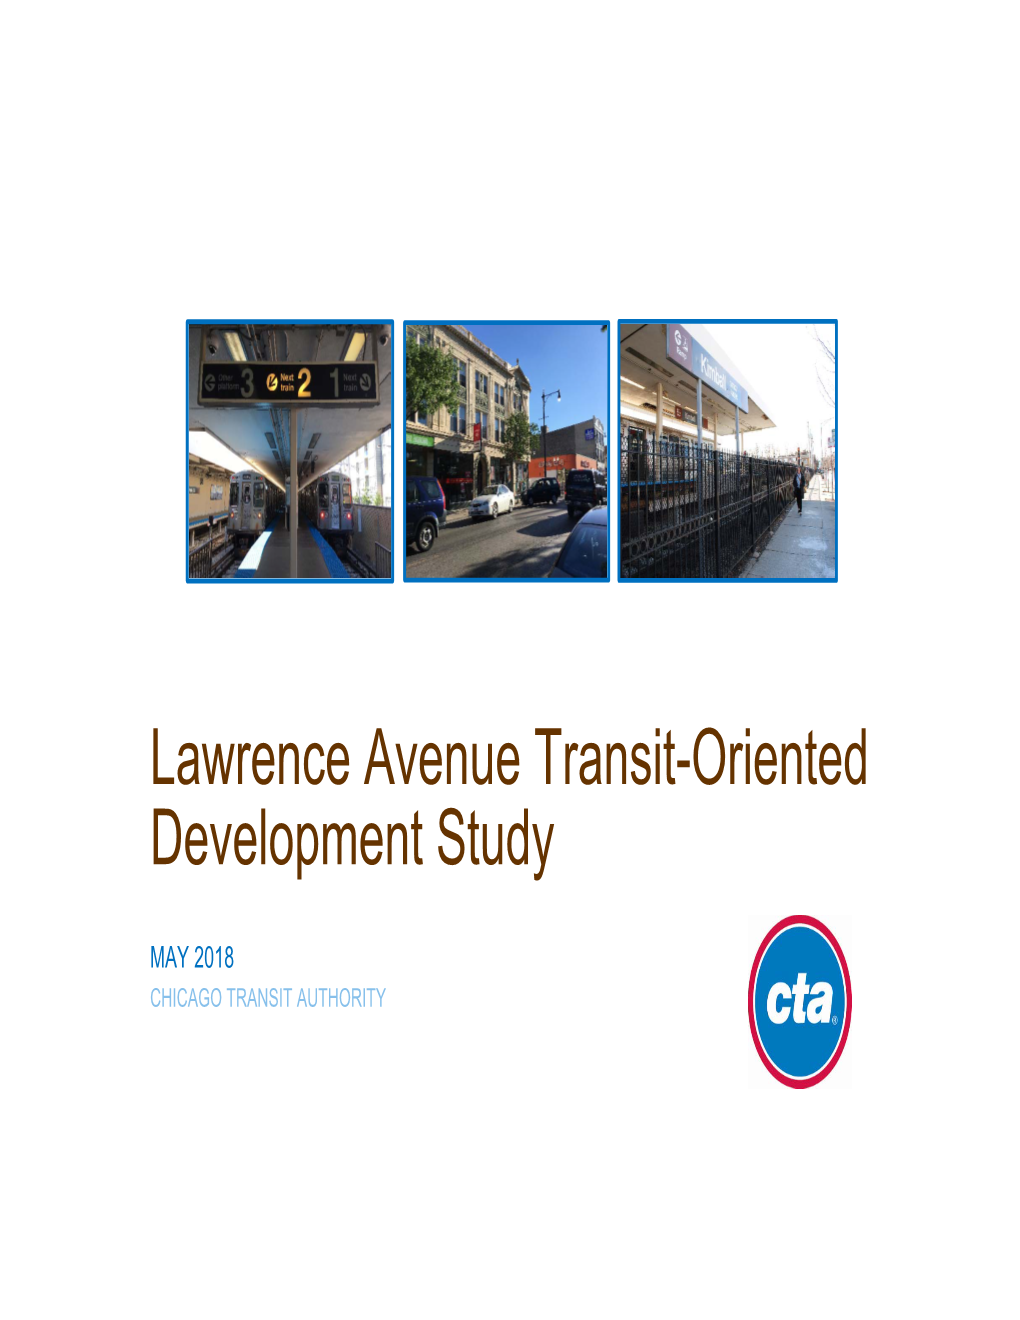 Lawrence Avenue Transit-Oriented Development Study